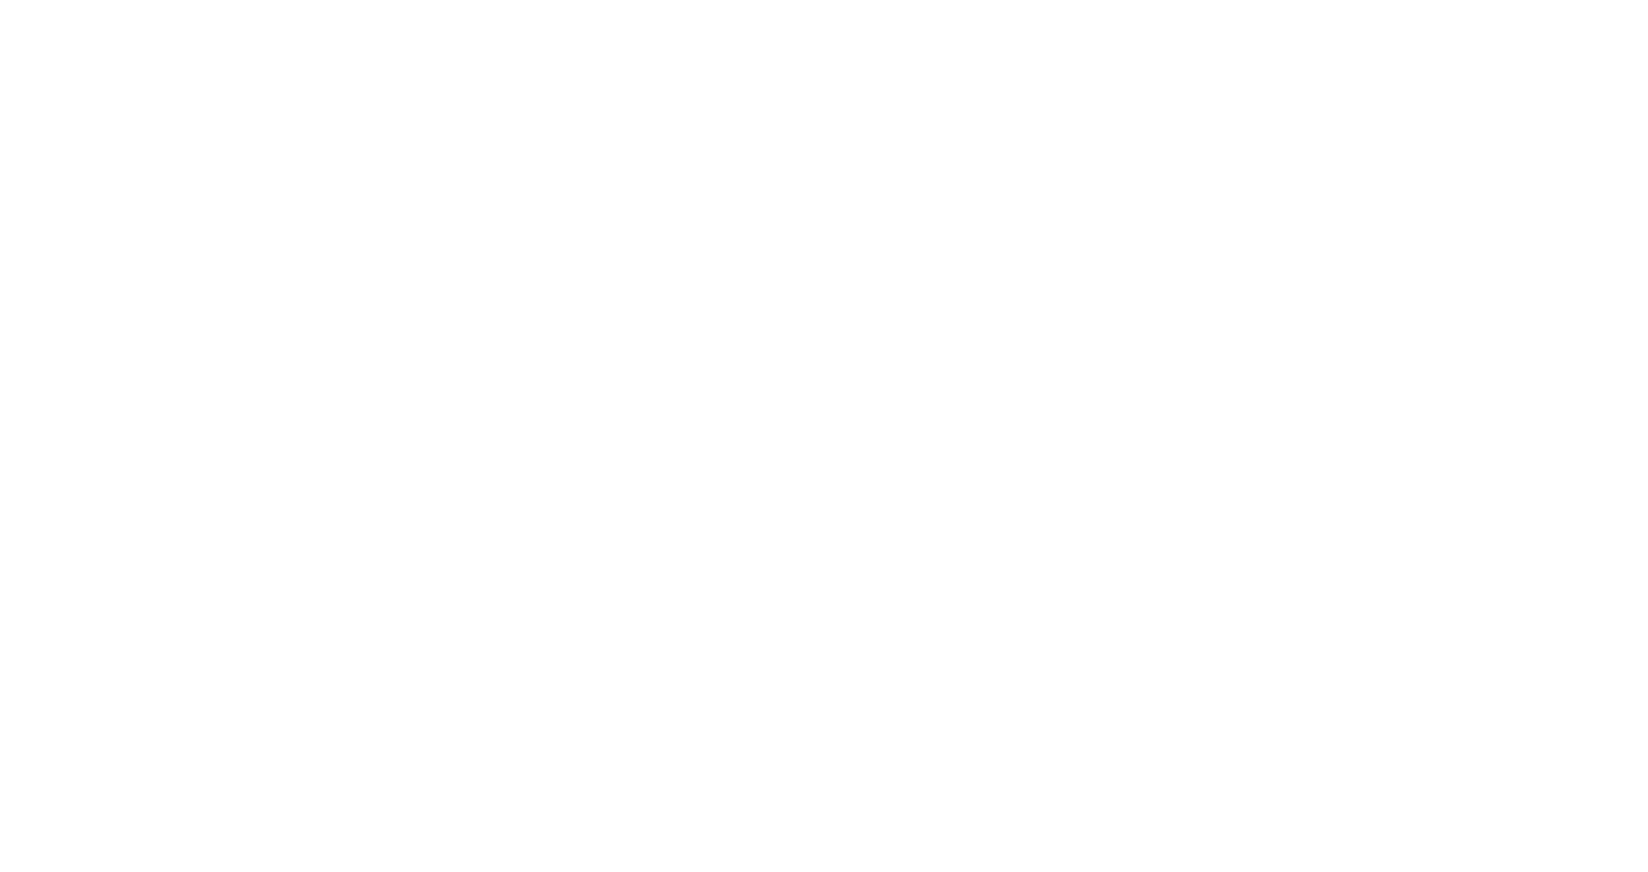 Zuora logo for dark backgrounds (transparent PNG)